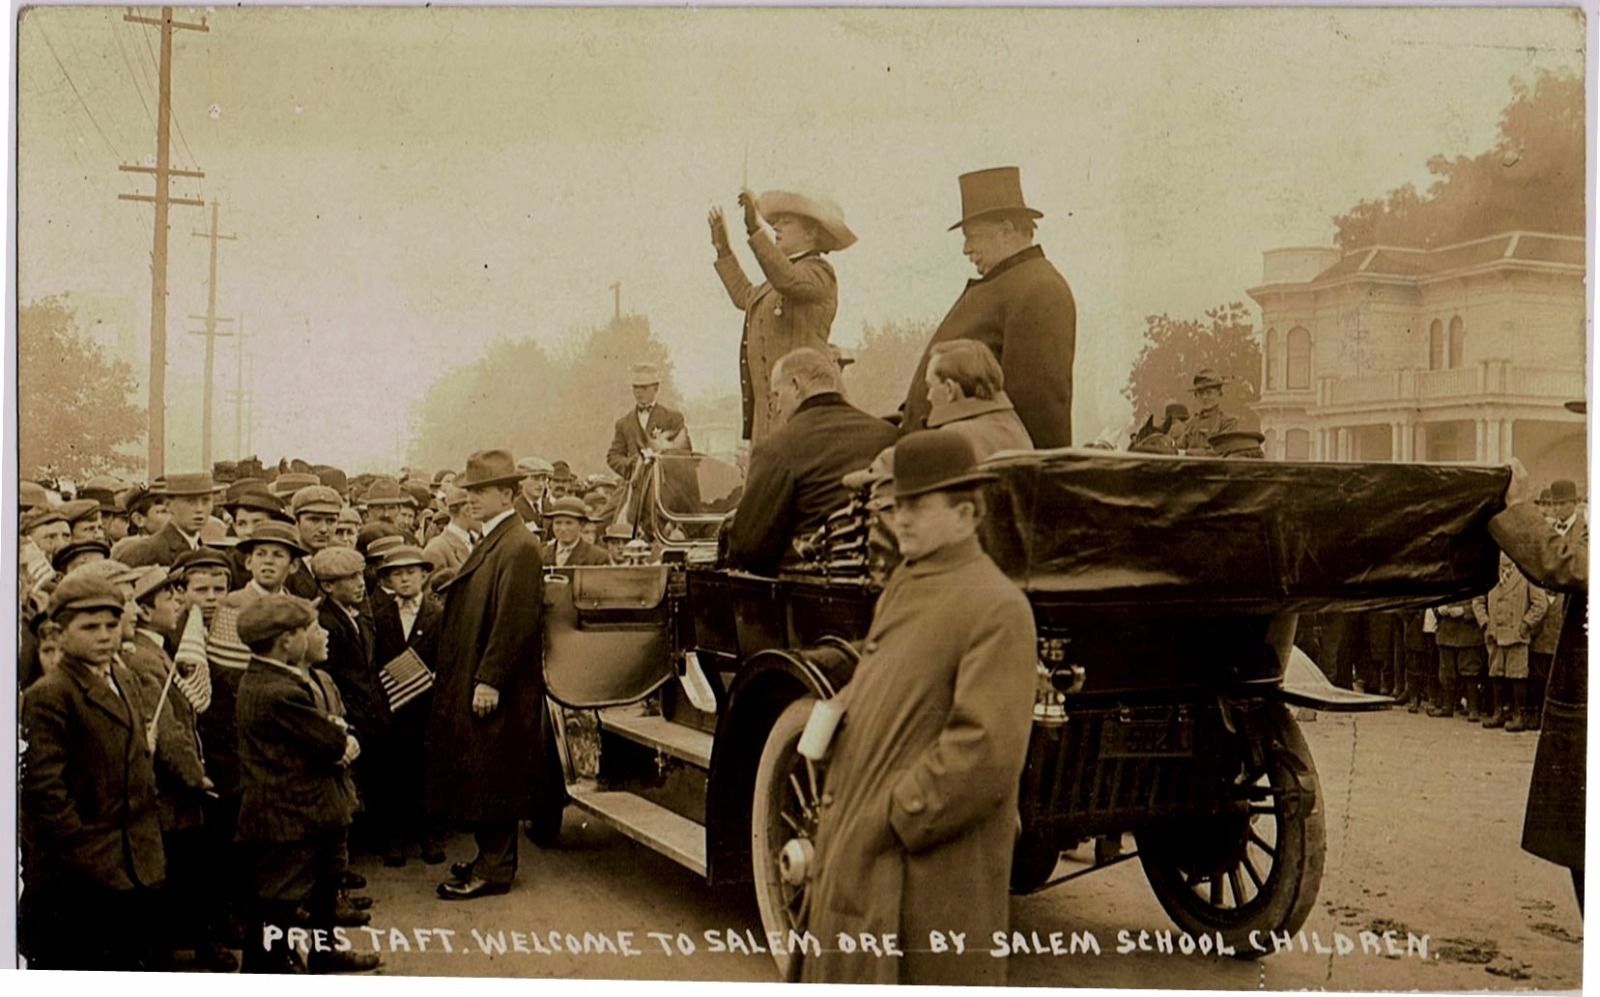 President Taft and his Secret Service men